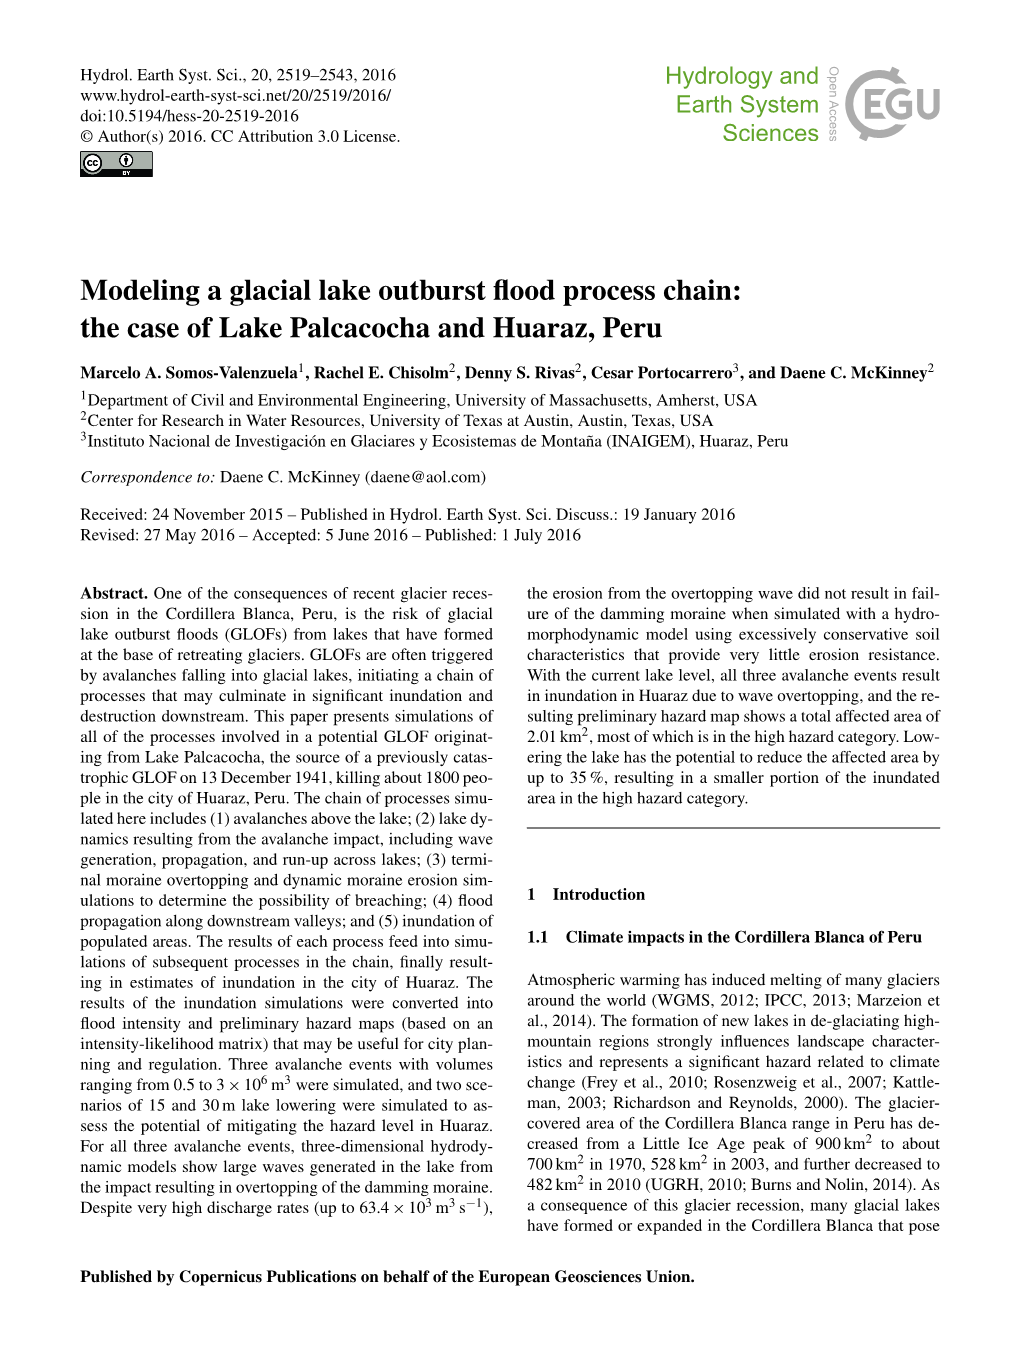 Modeling a Glacial Lake Outburst Flood Process Chain